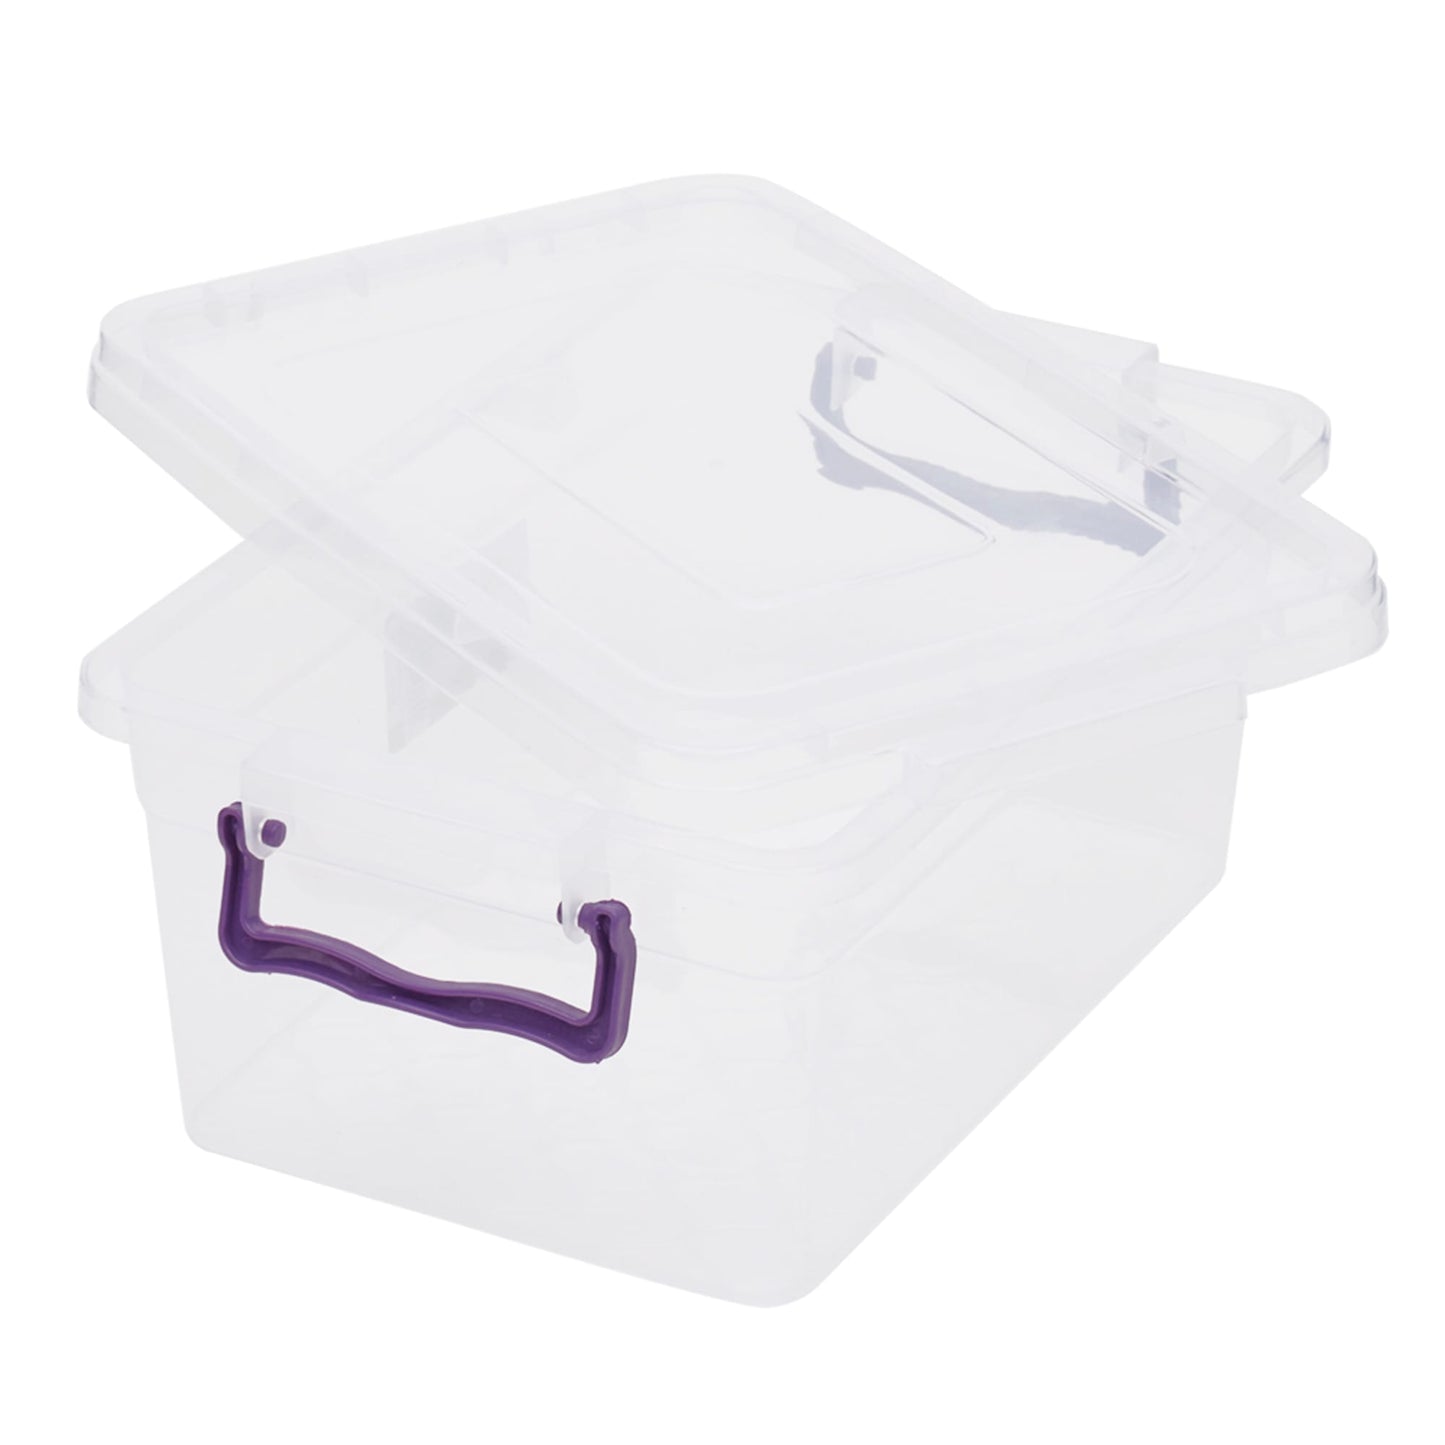 5 Lt Plastic Storage Box with Locking Lid, Clear